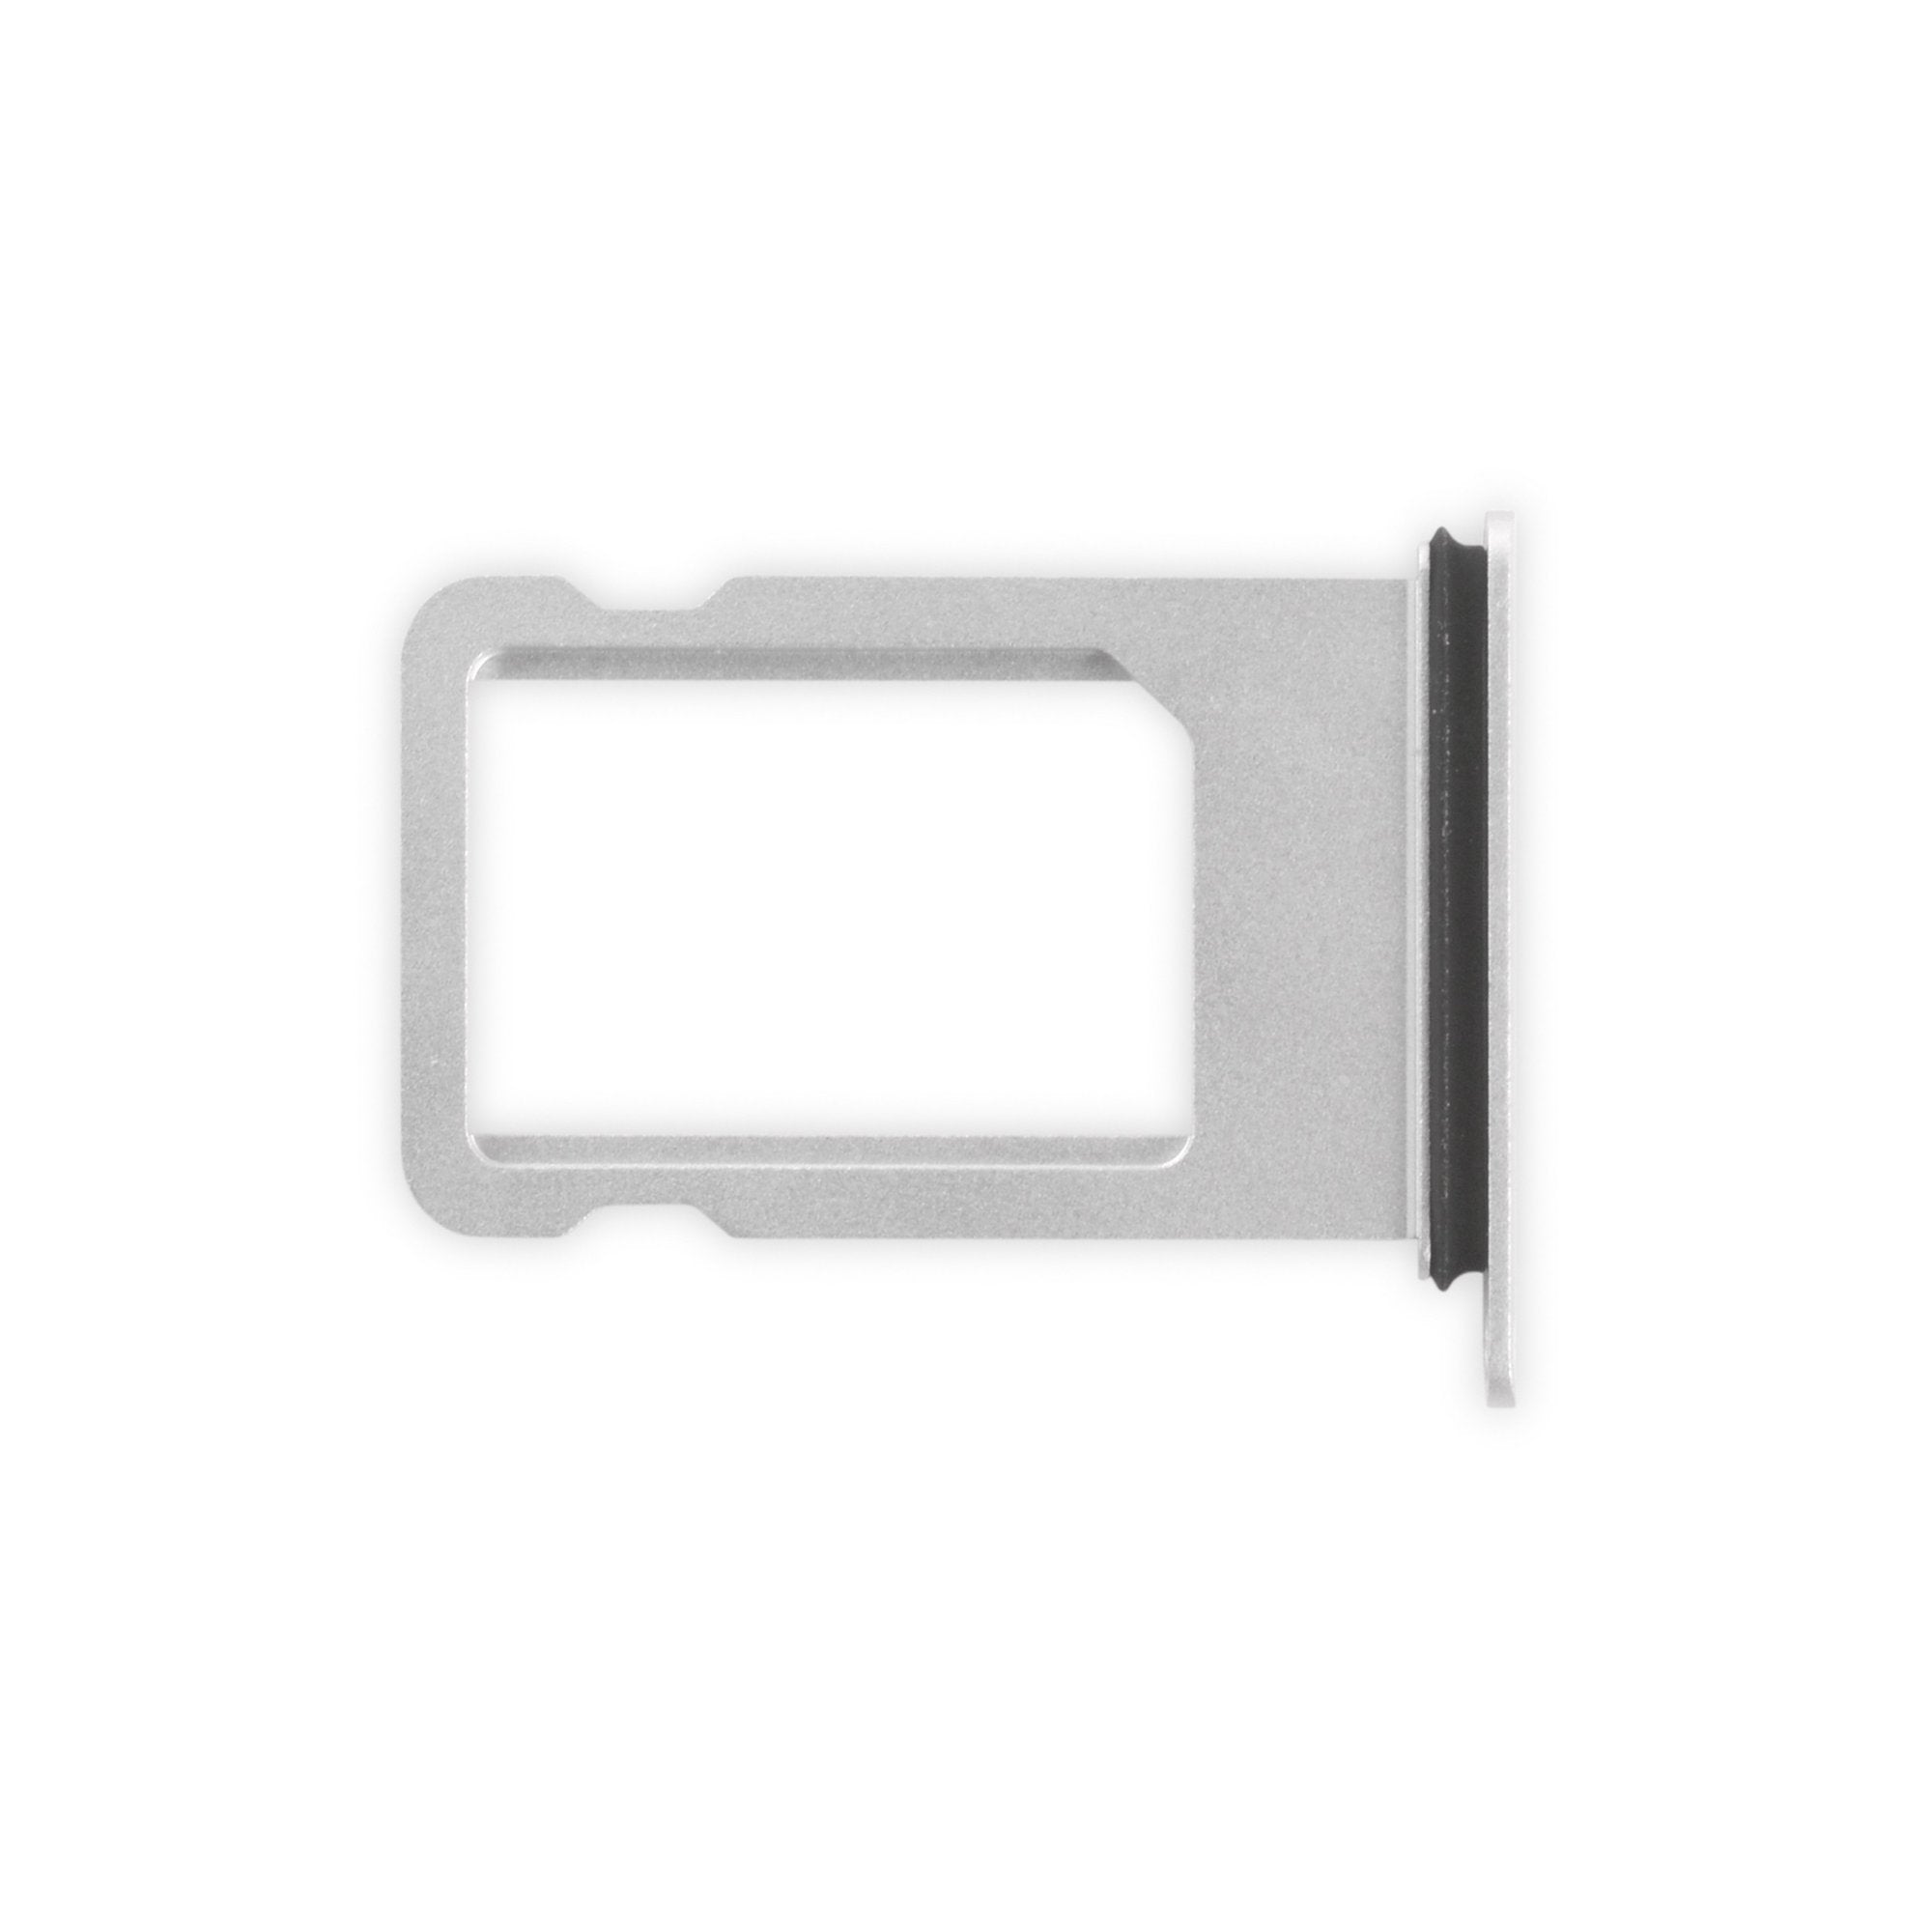 iPhone 7 SIM Card Tray Silver New